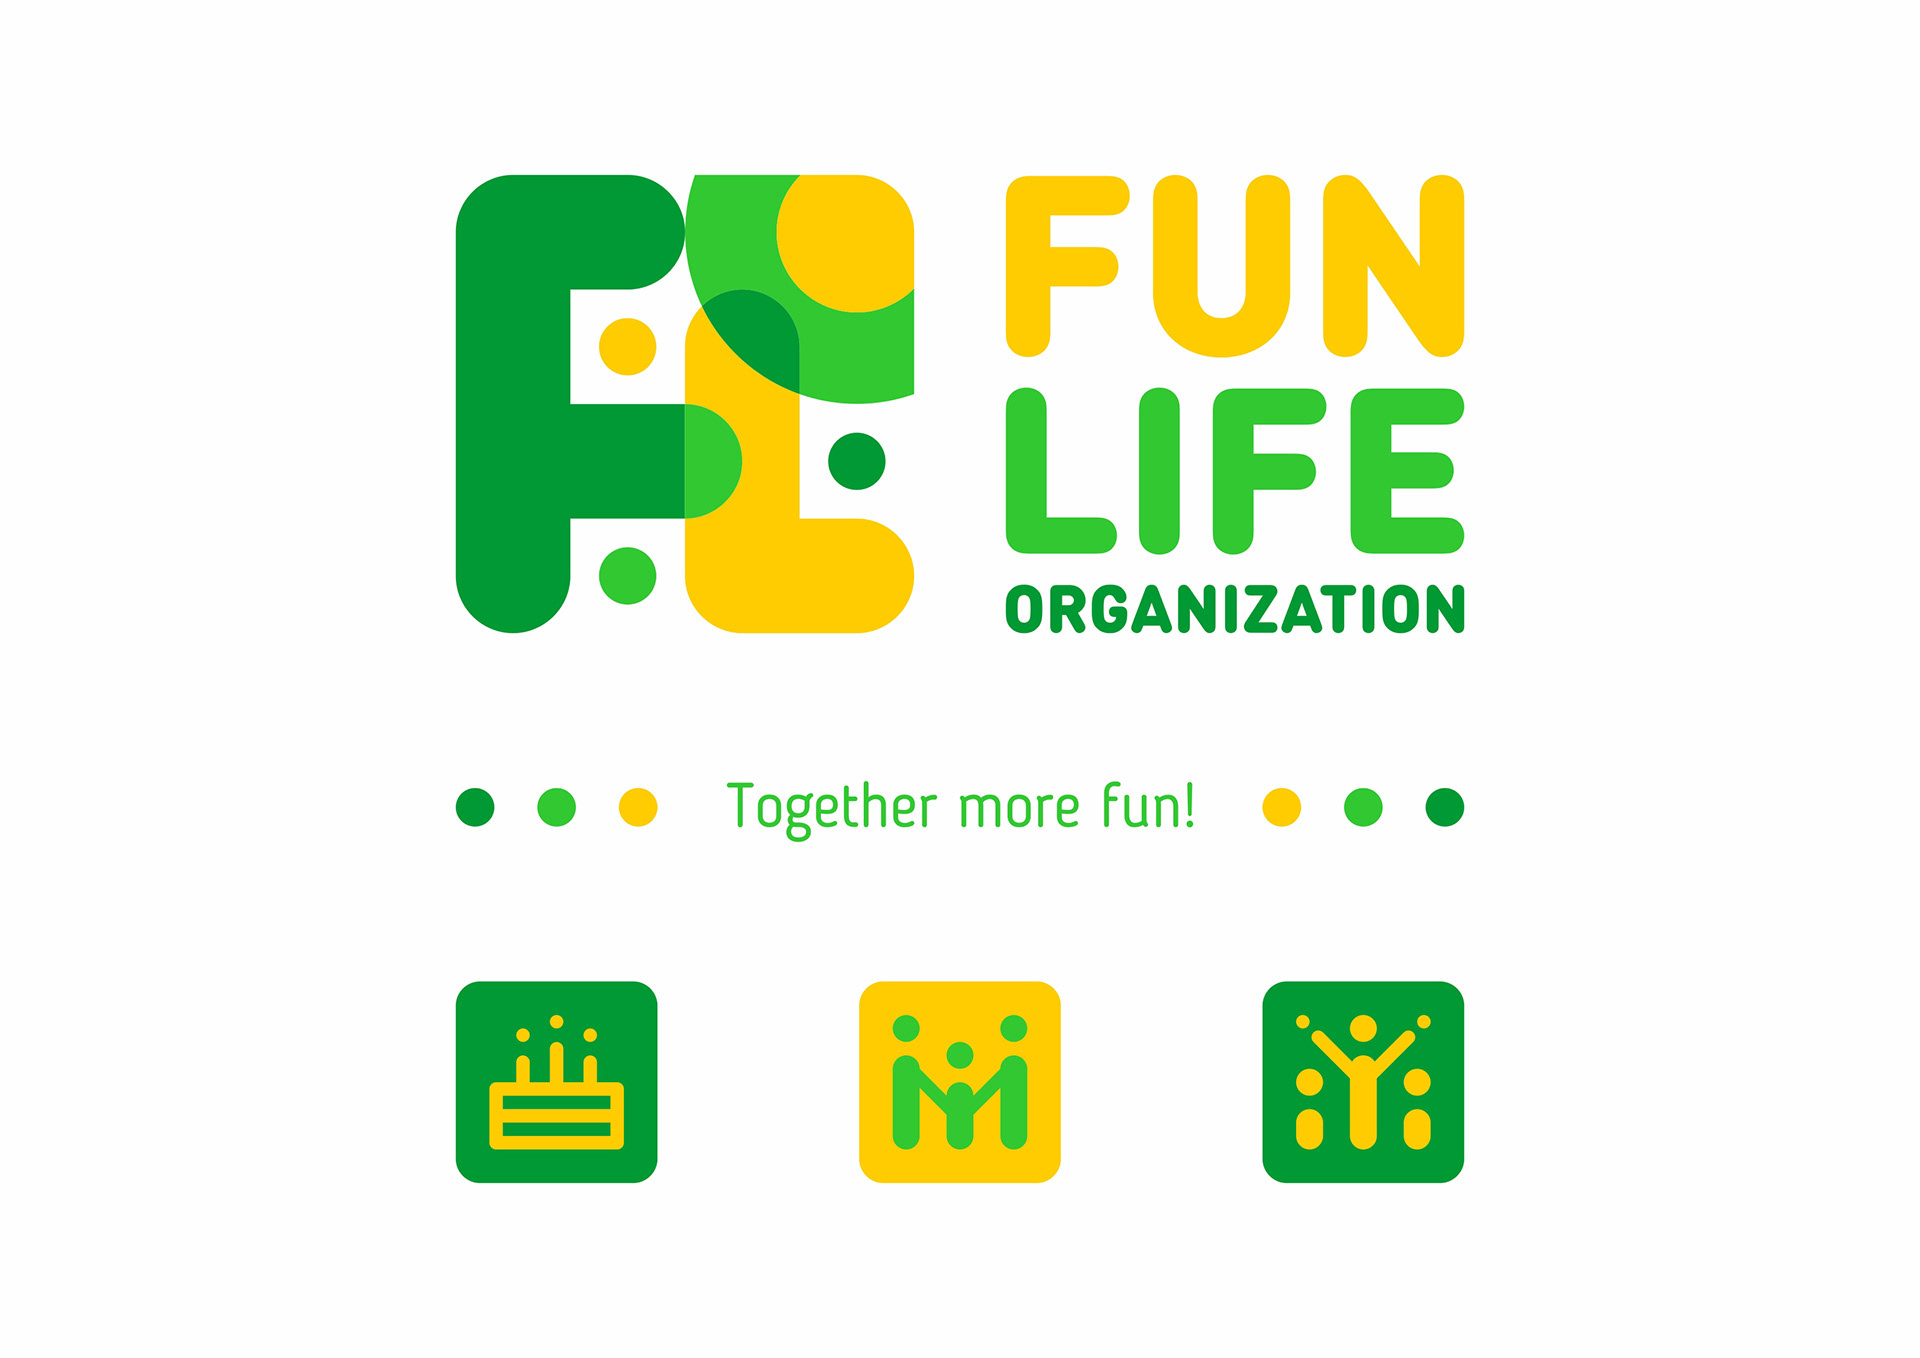 Life for fun. More fun logo.